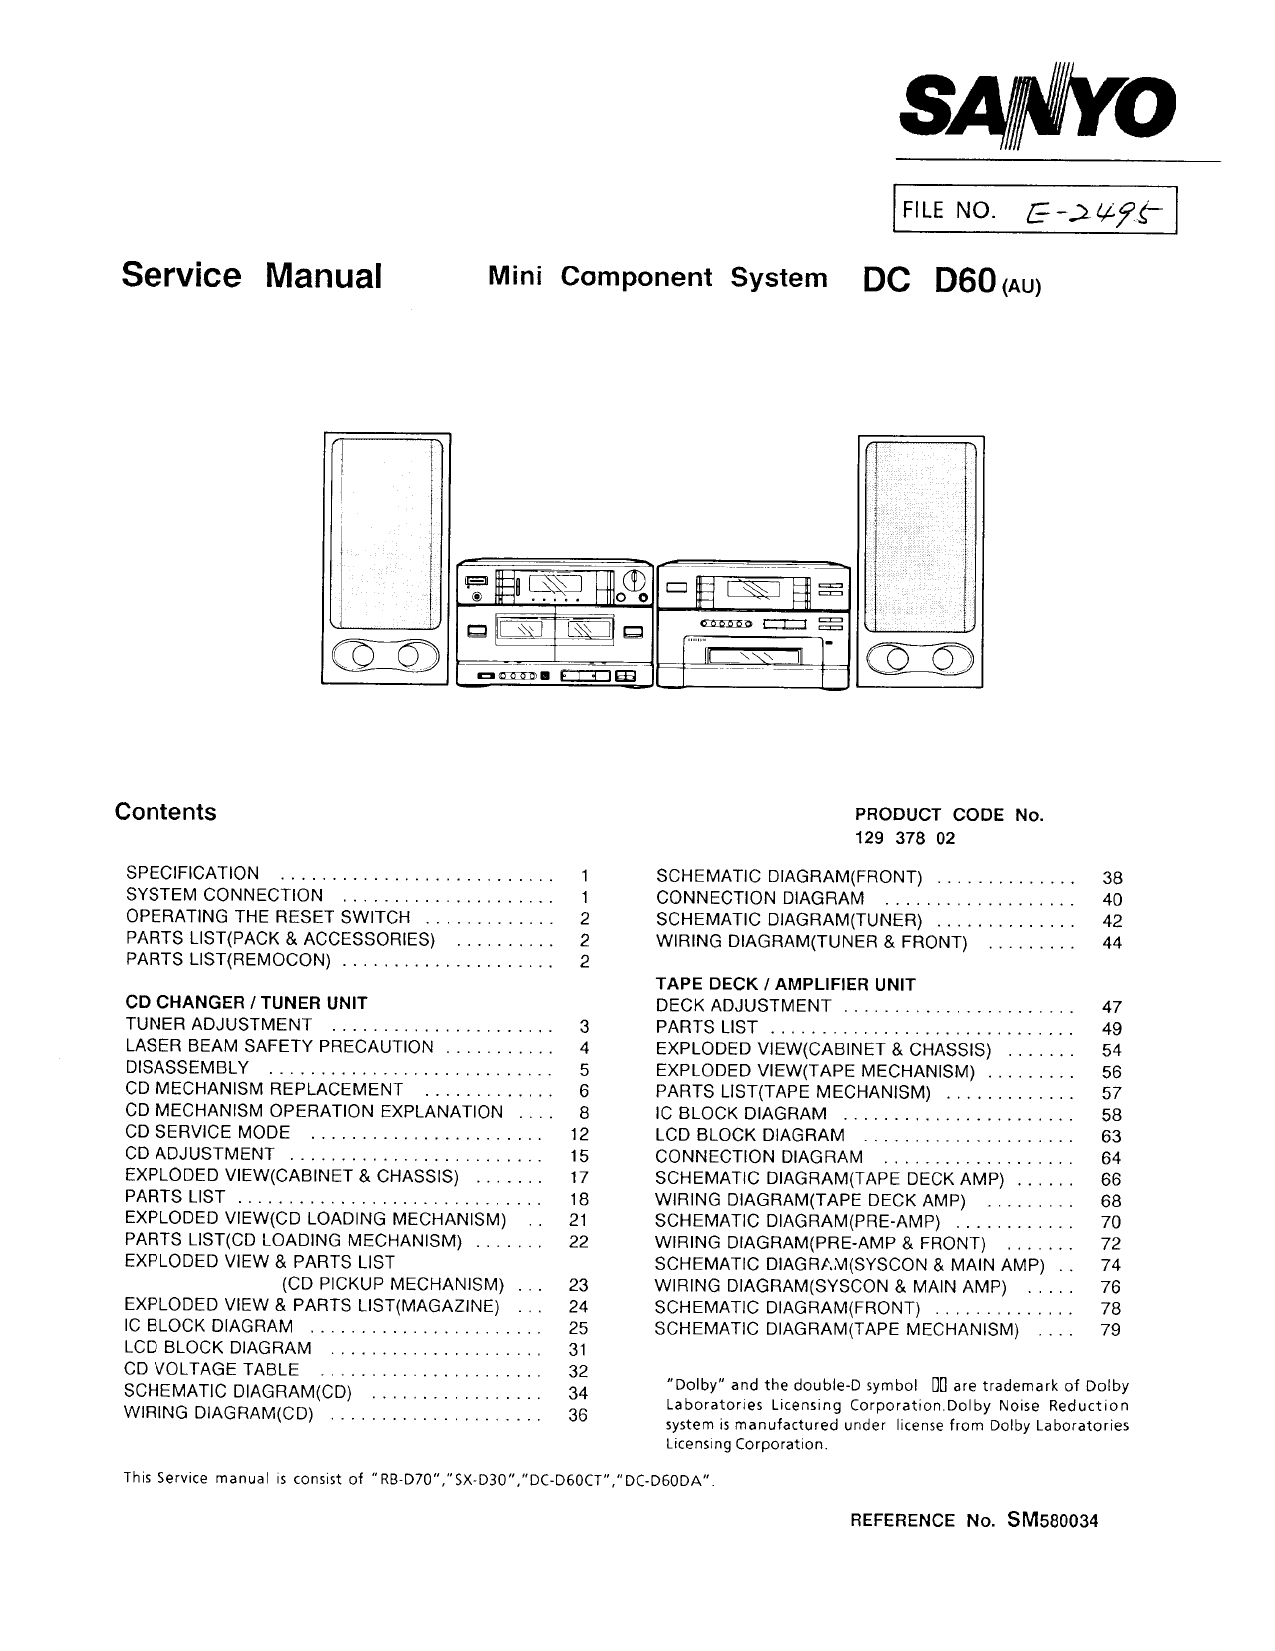 Sanyo Dc D60 Service Manual Manualzz